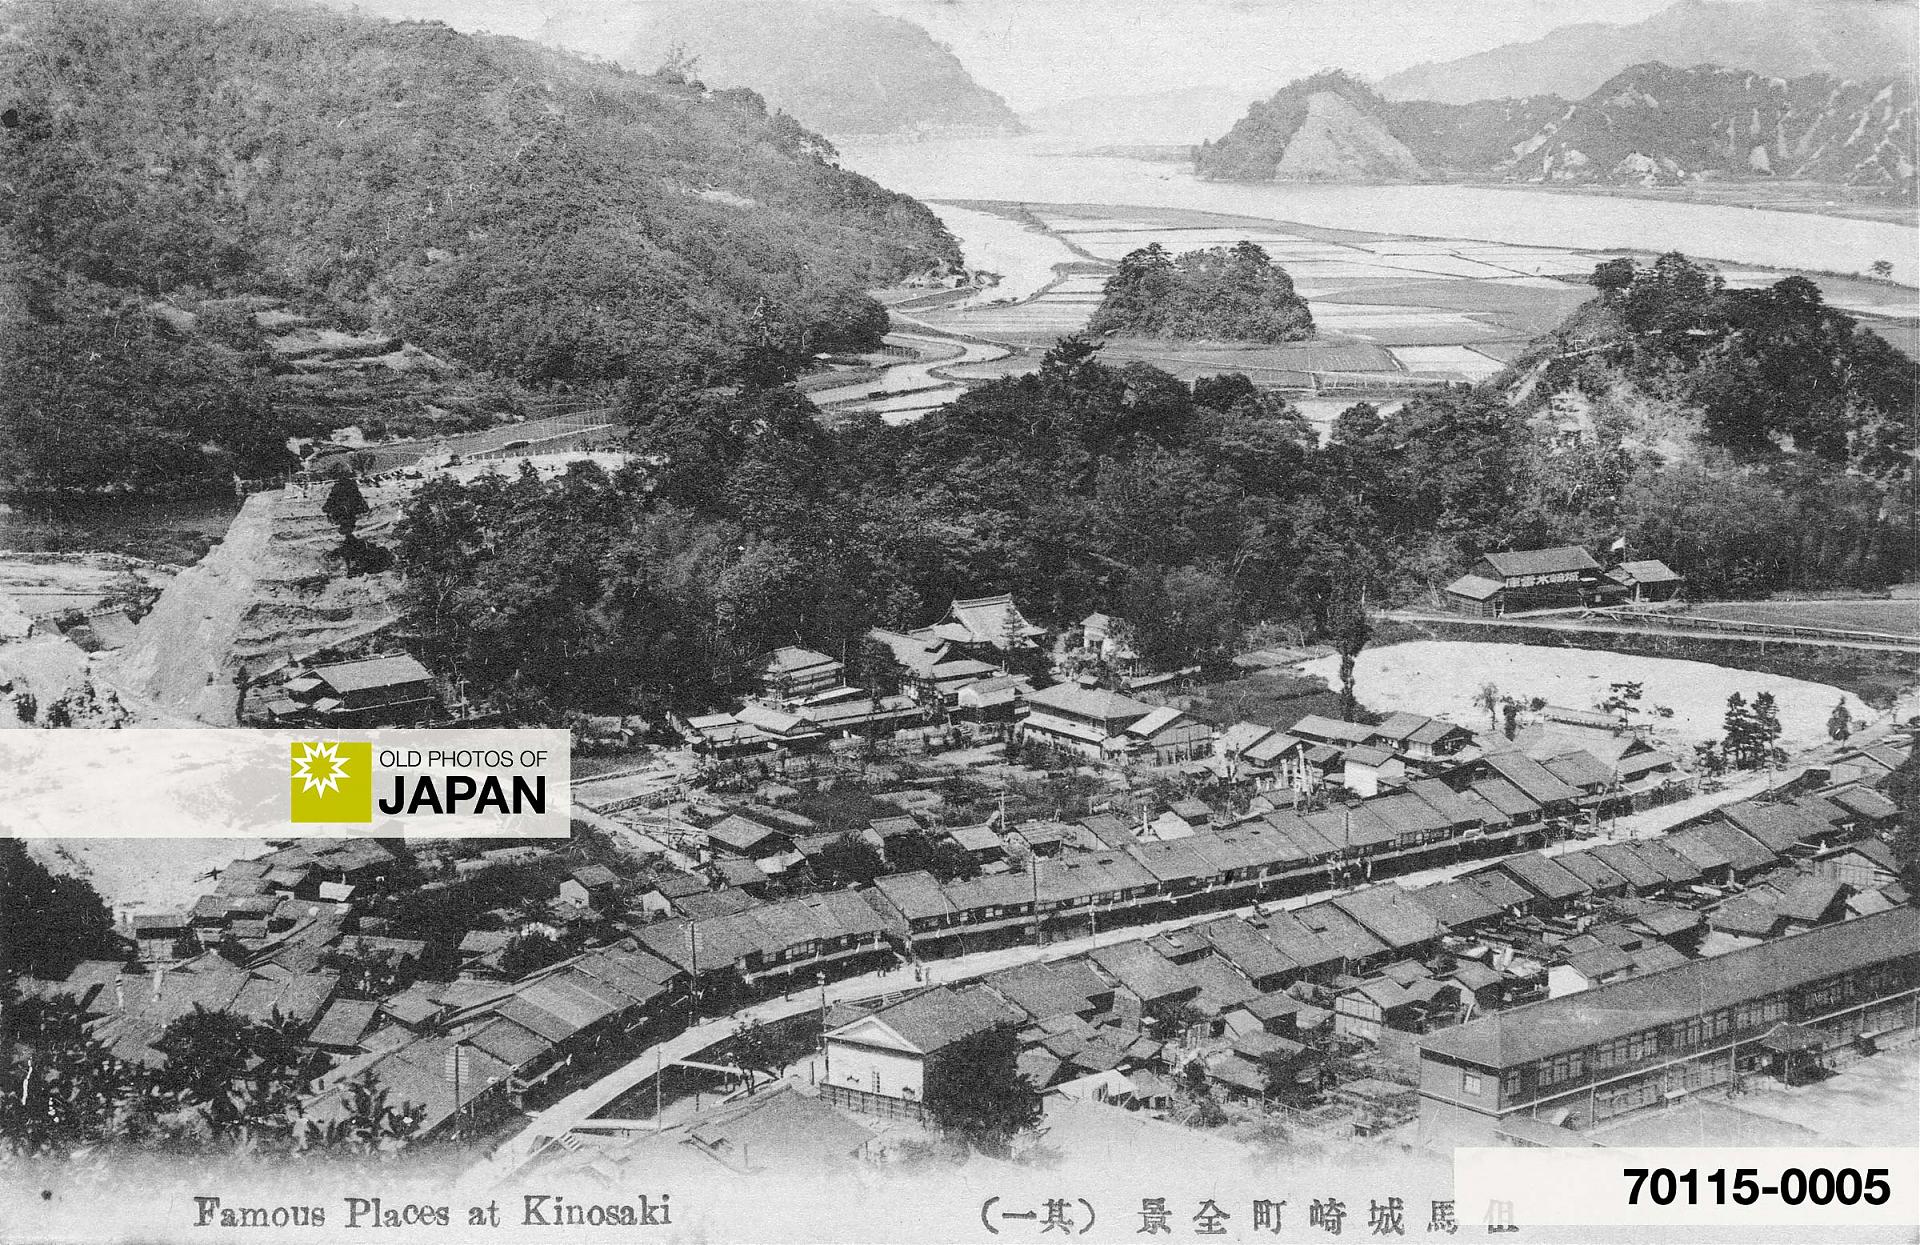 70115-0005 - Kinosaki Onsen hot spring, 1920s